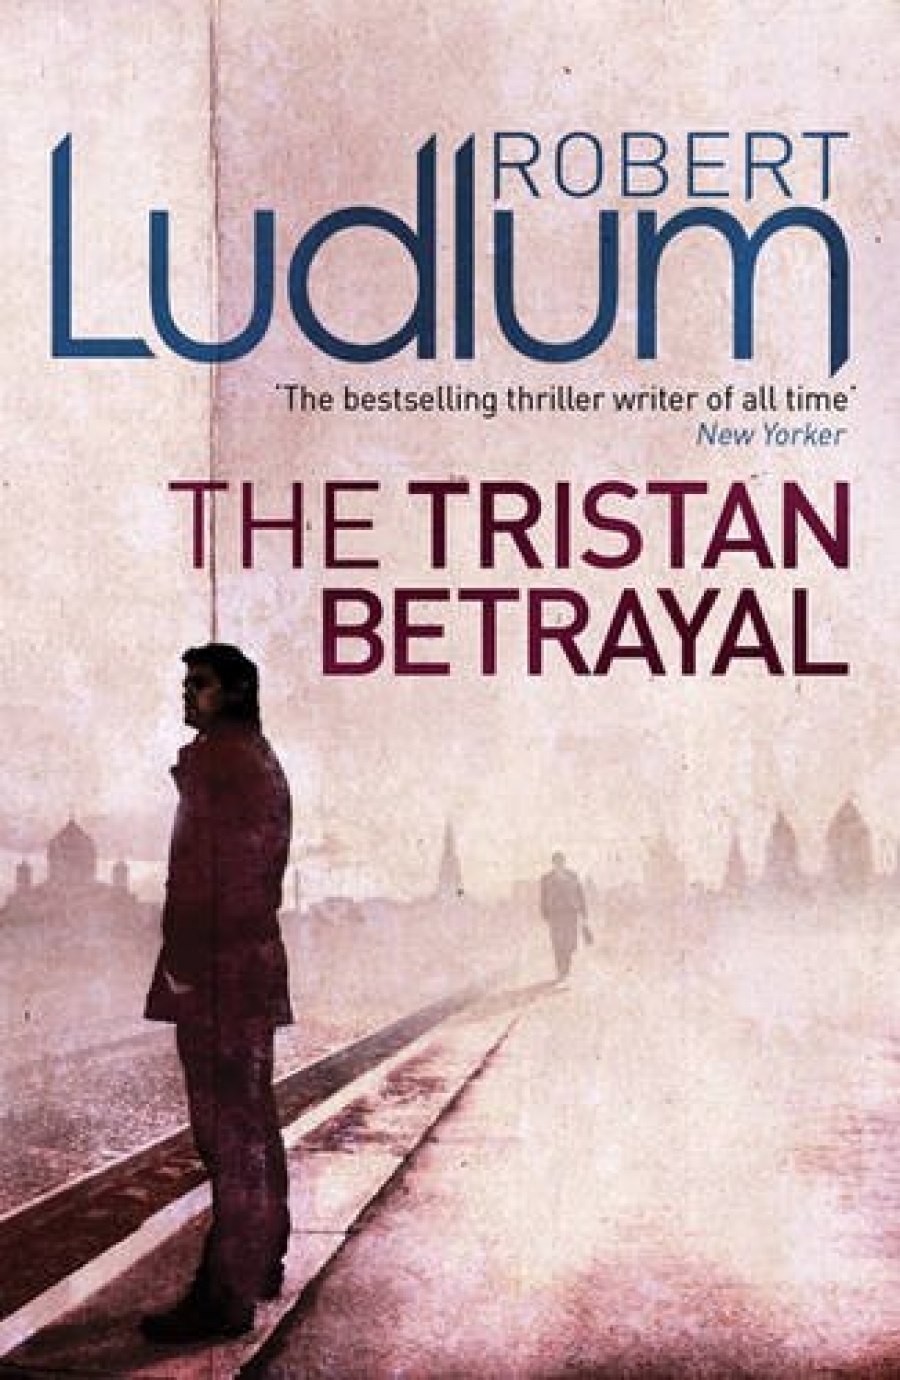 Ludlum, Robert Tristan Betrayal, the 